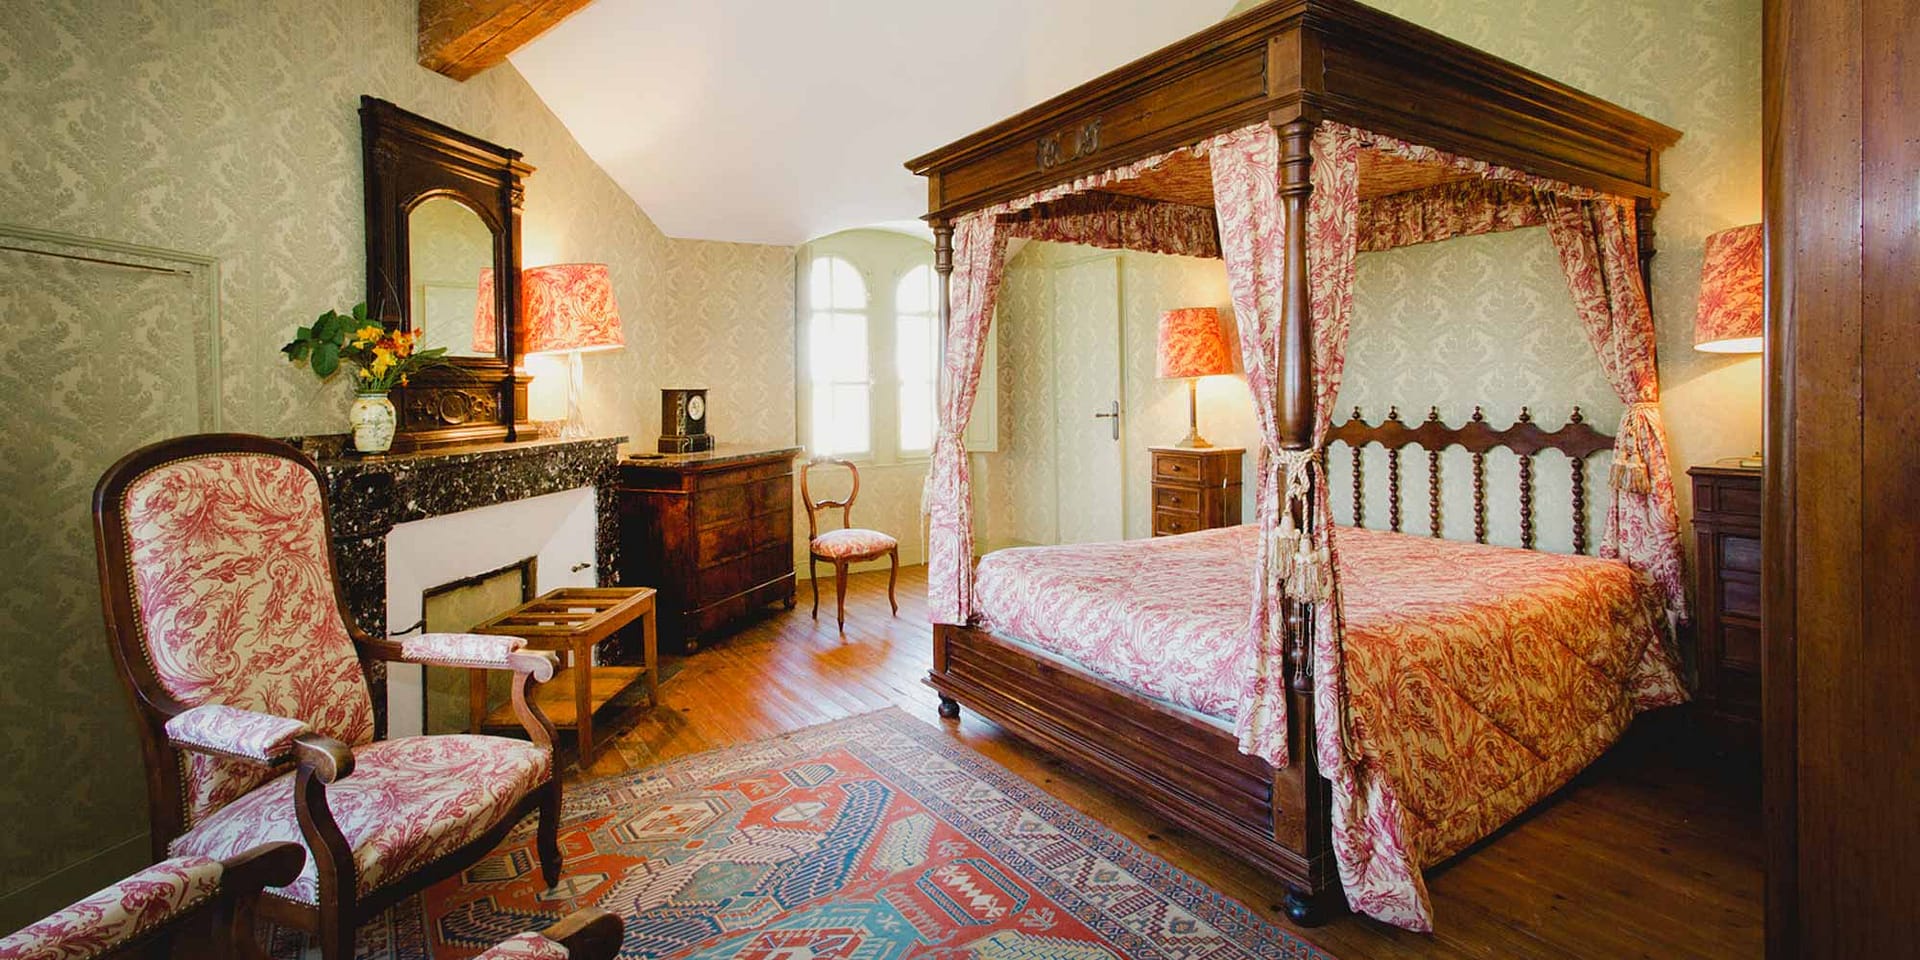 Chateau Leroy bedroom